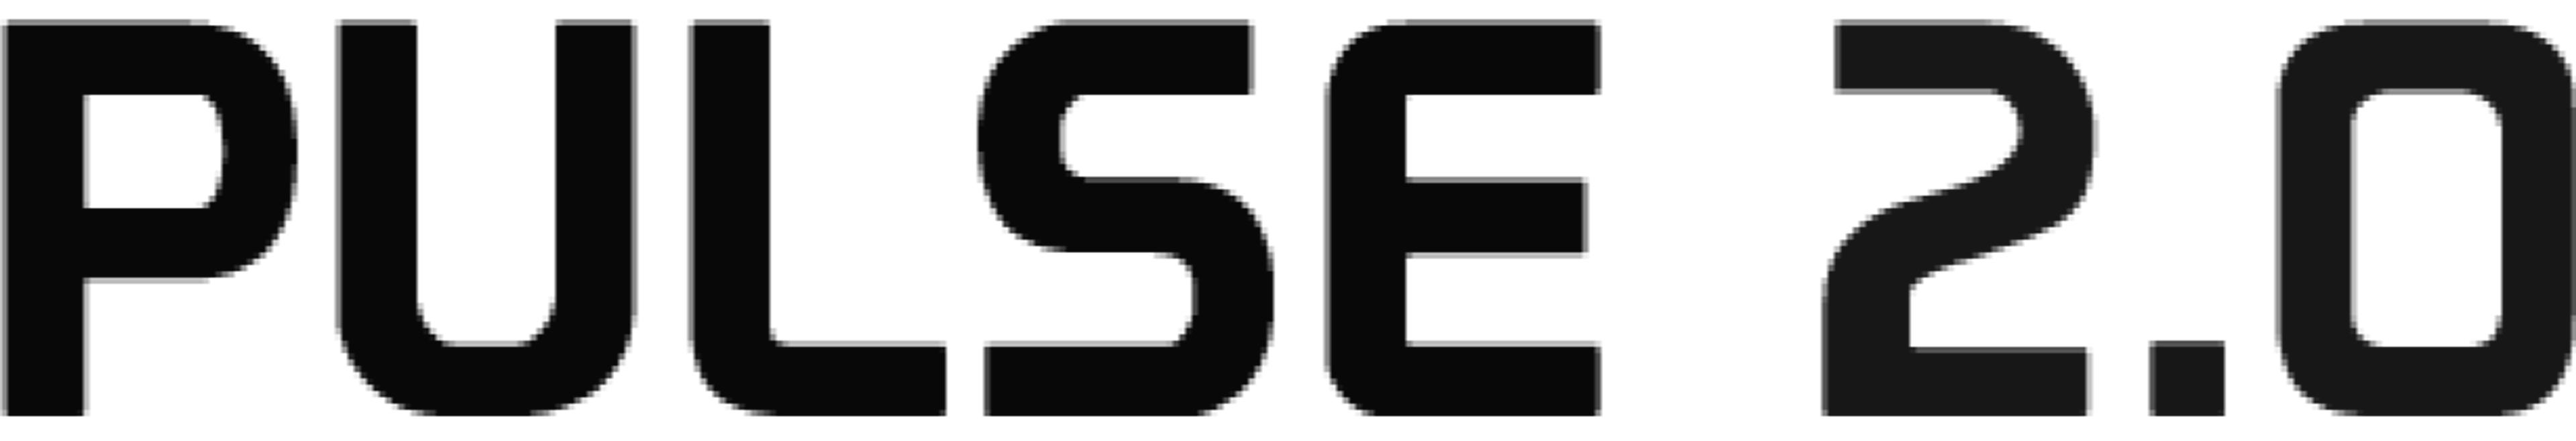 Pulse 2.0 Logo